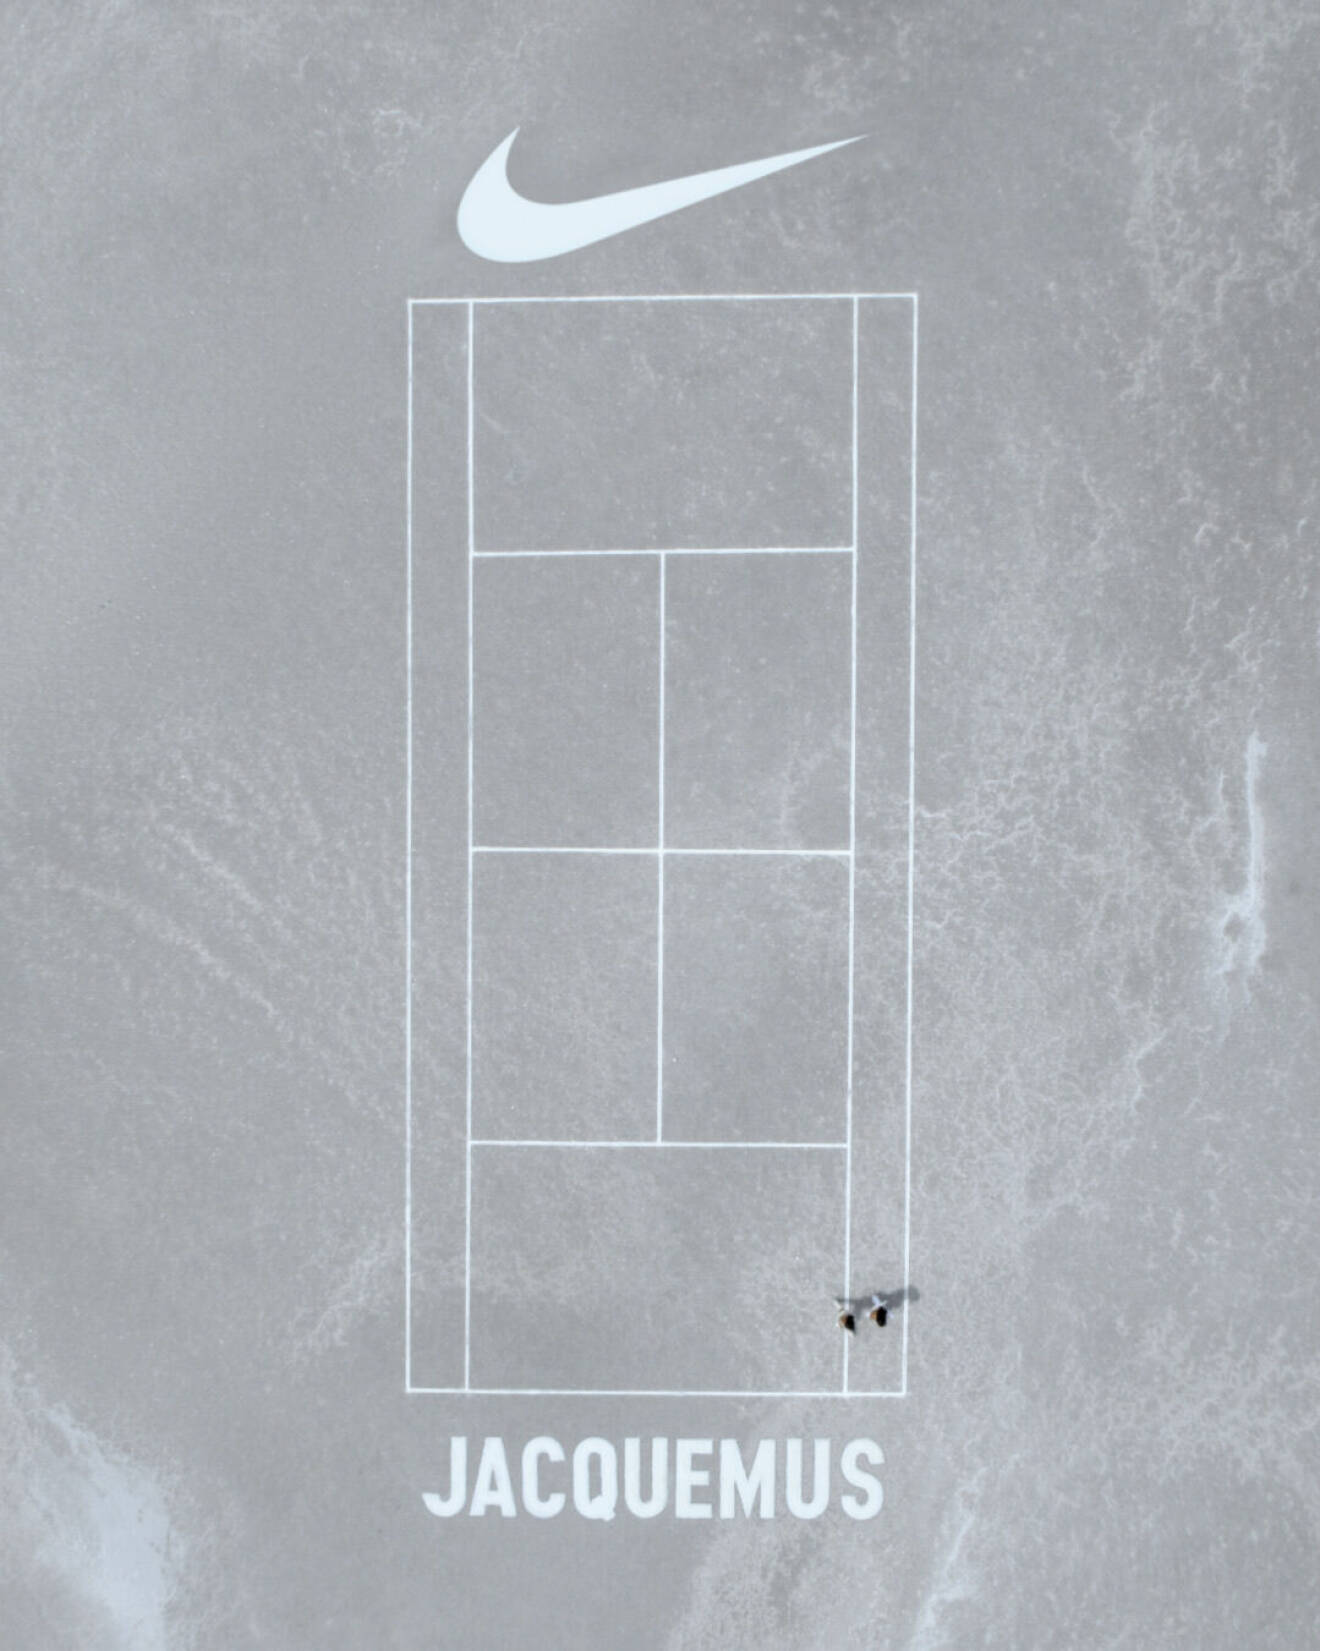 Jacquemus x Nike.